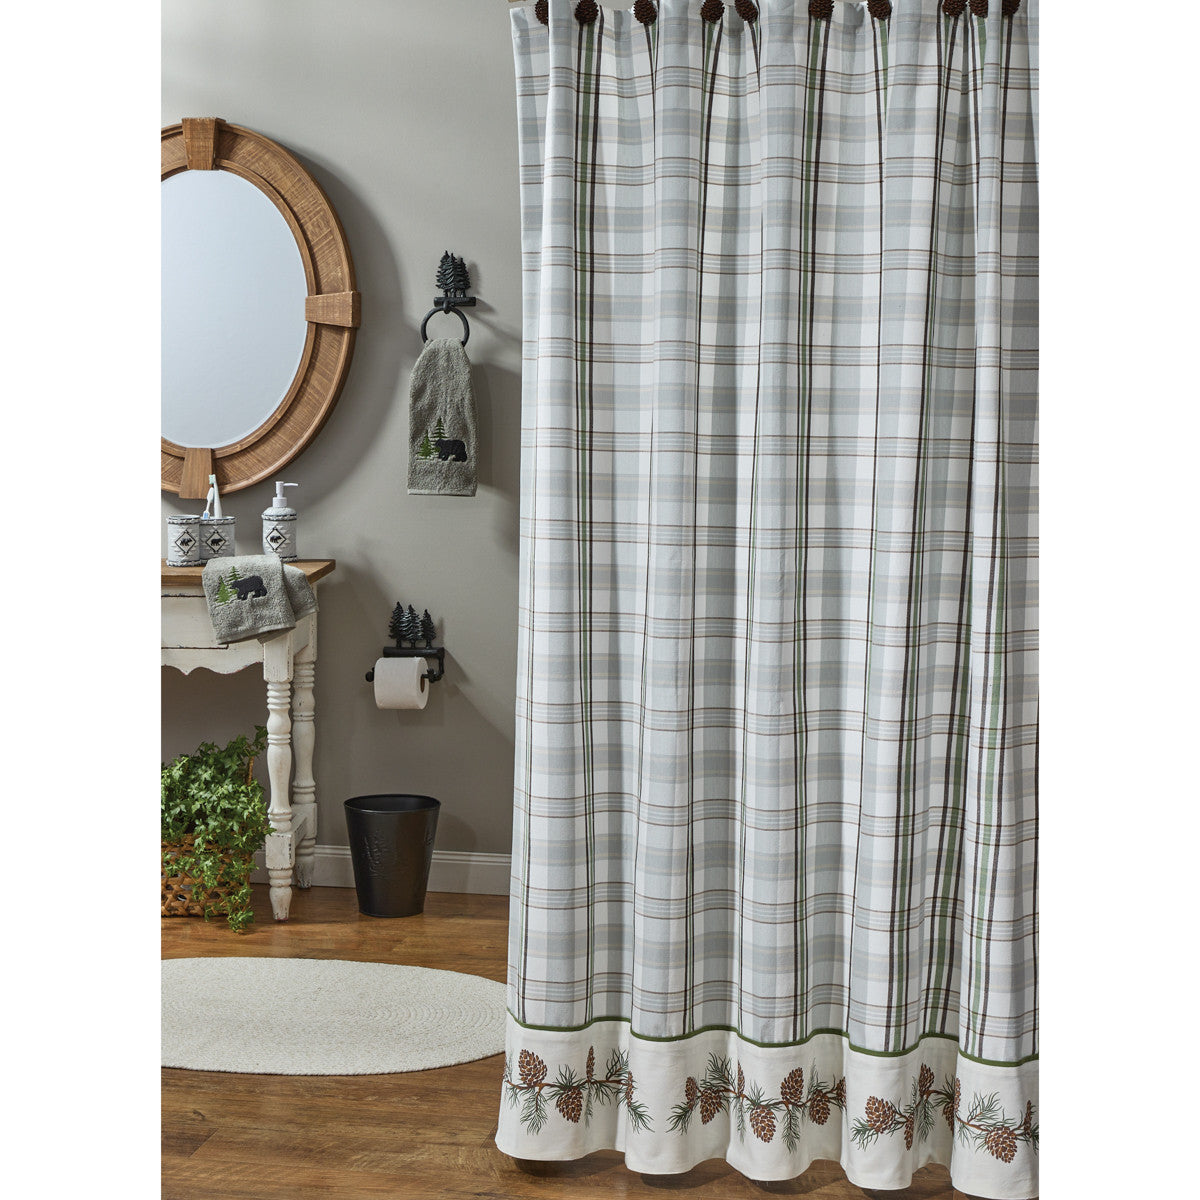 Ponderosa Pine Bordered Shower Curtain 72" X 72" Set of 2 - Park Designs